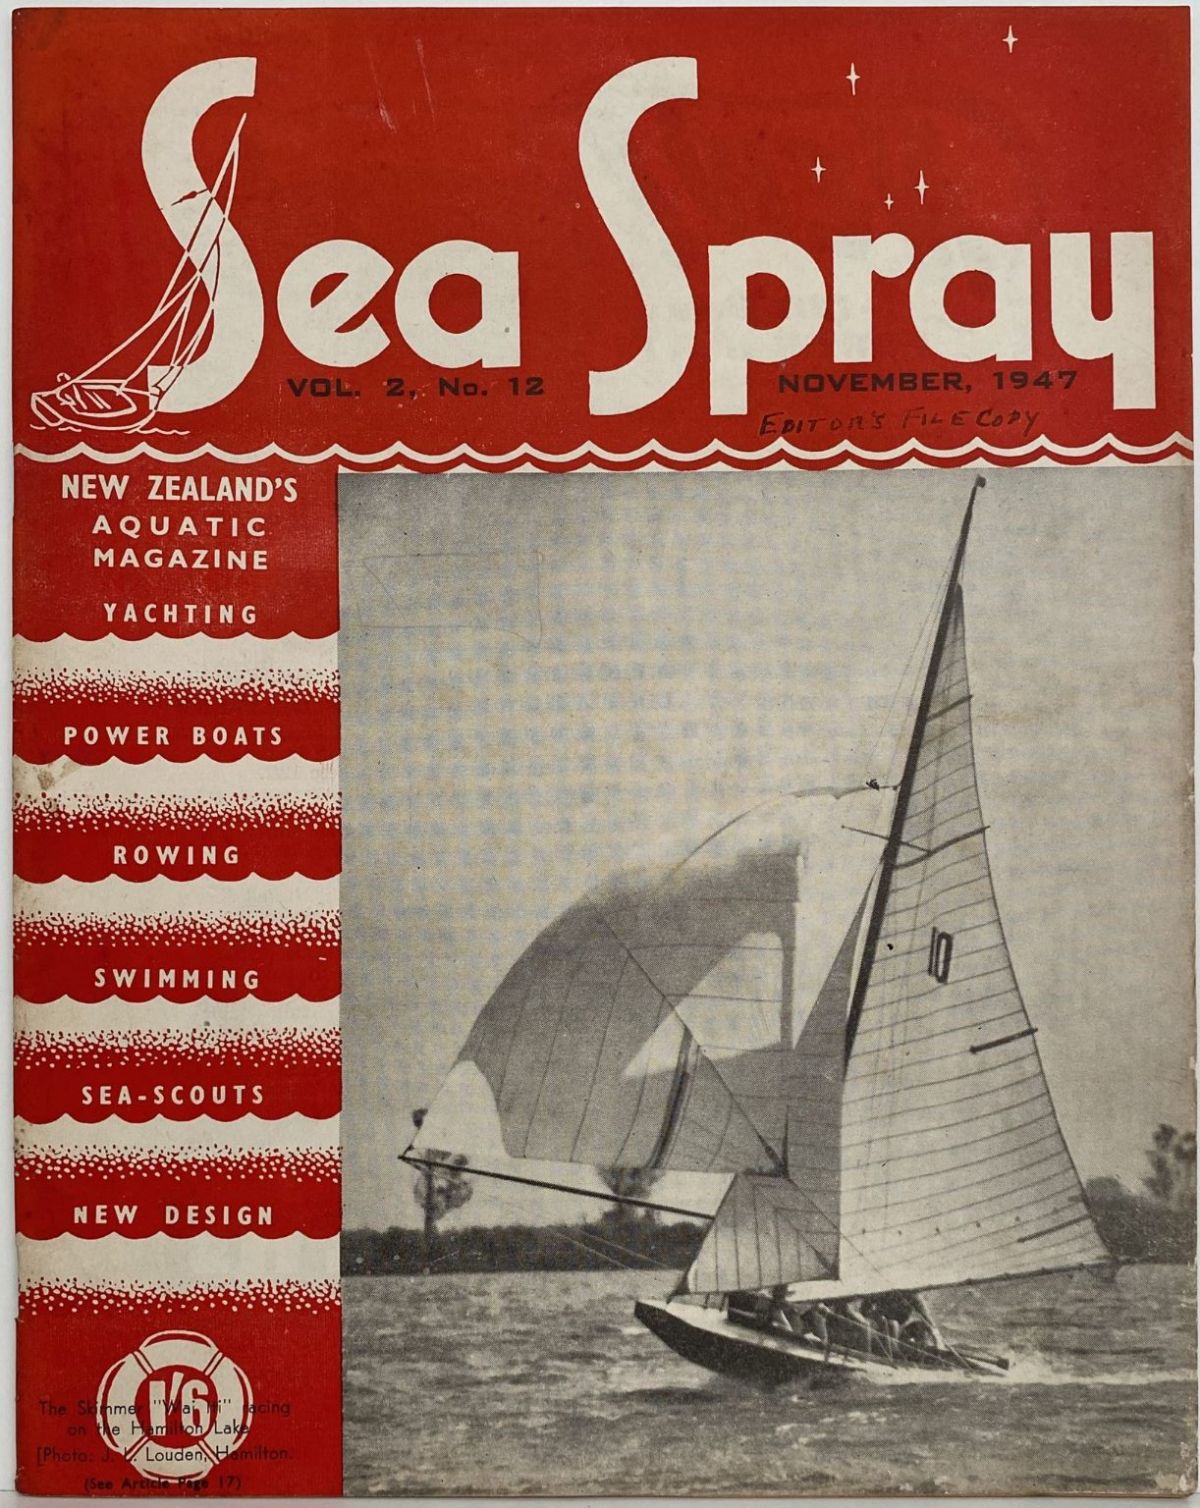 VINTAGE MAGAZINE: Sea Spray - Vol. 2, No. 12 - November 1947